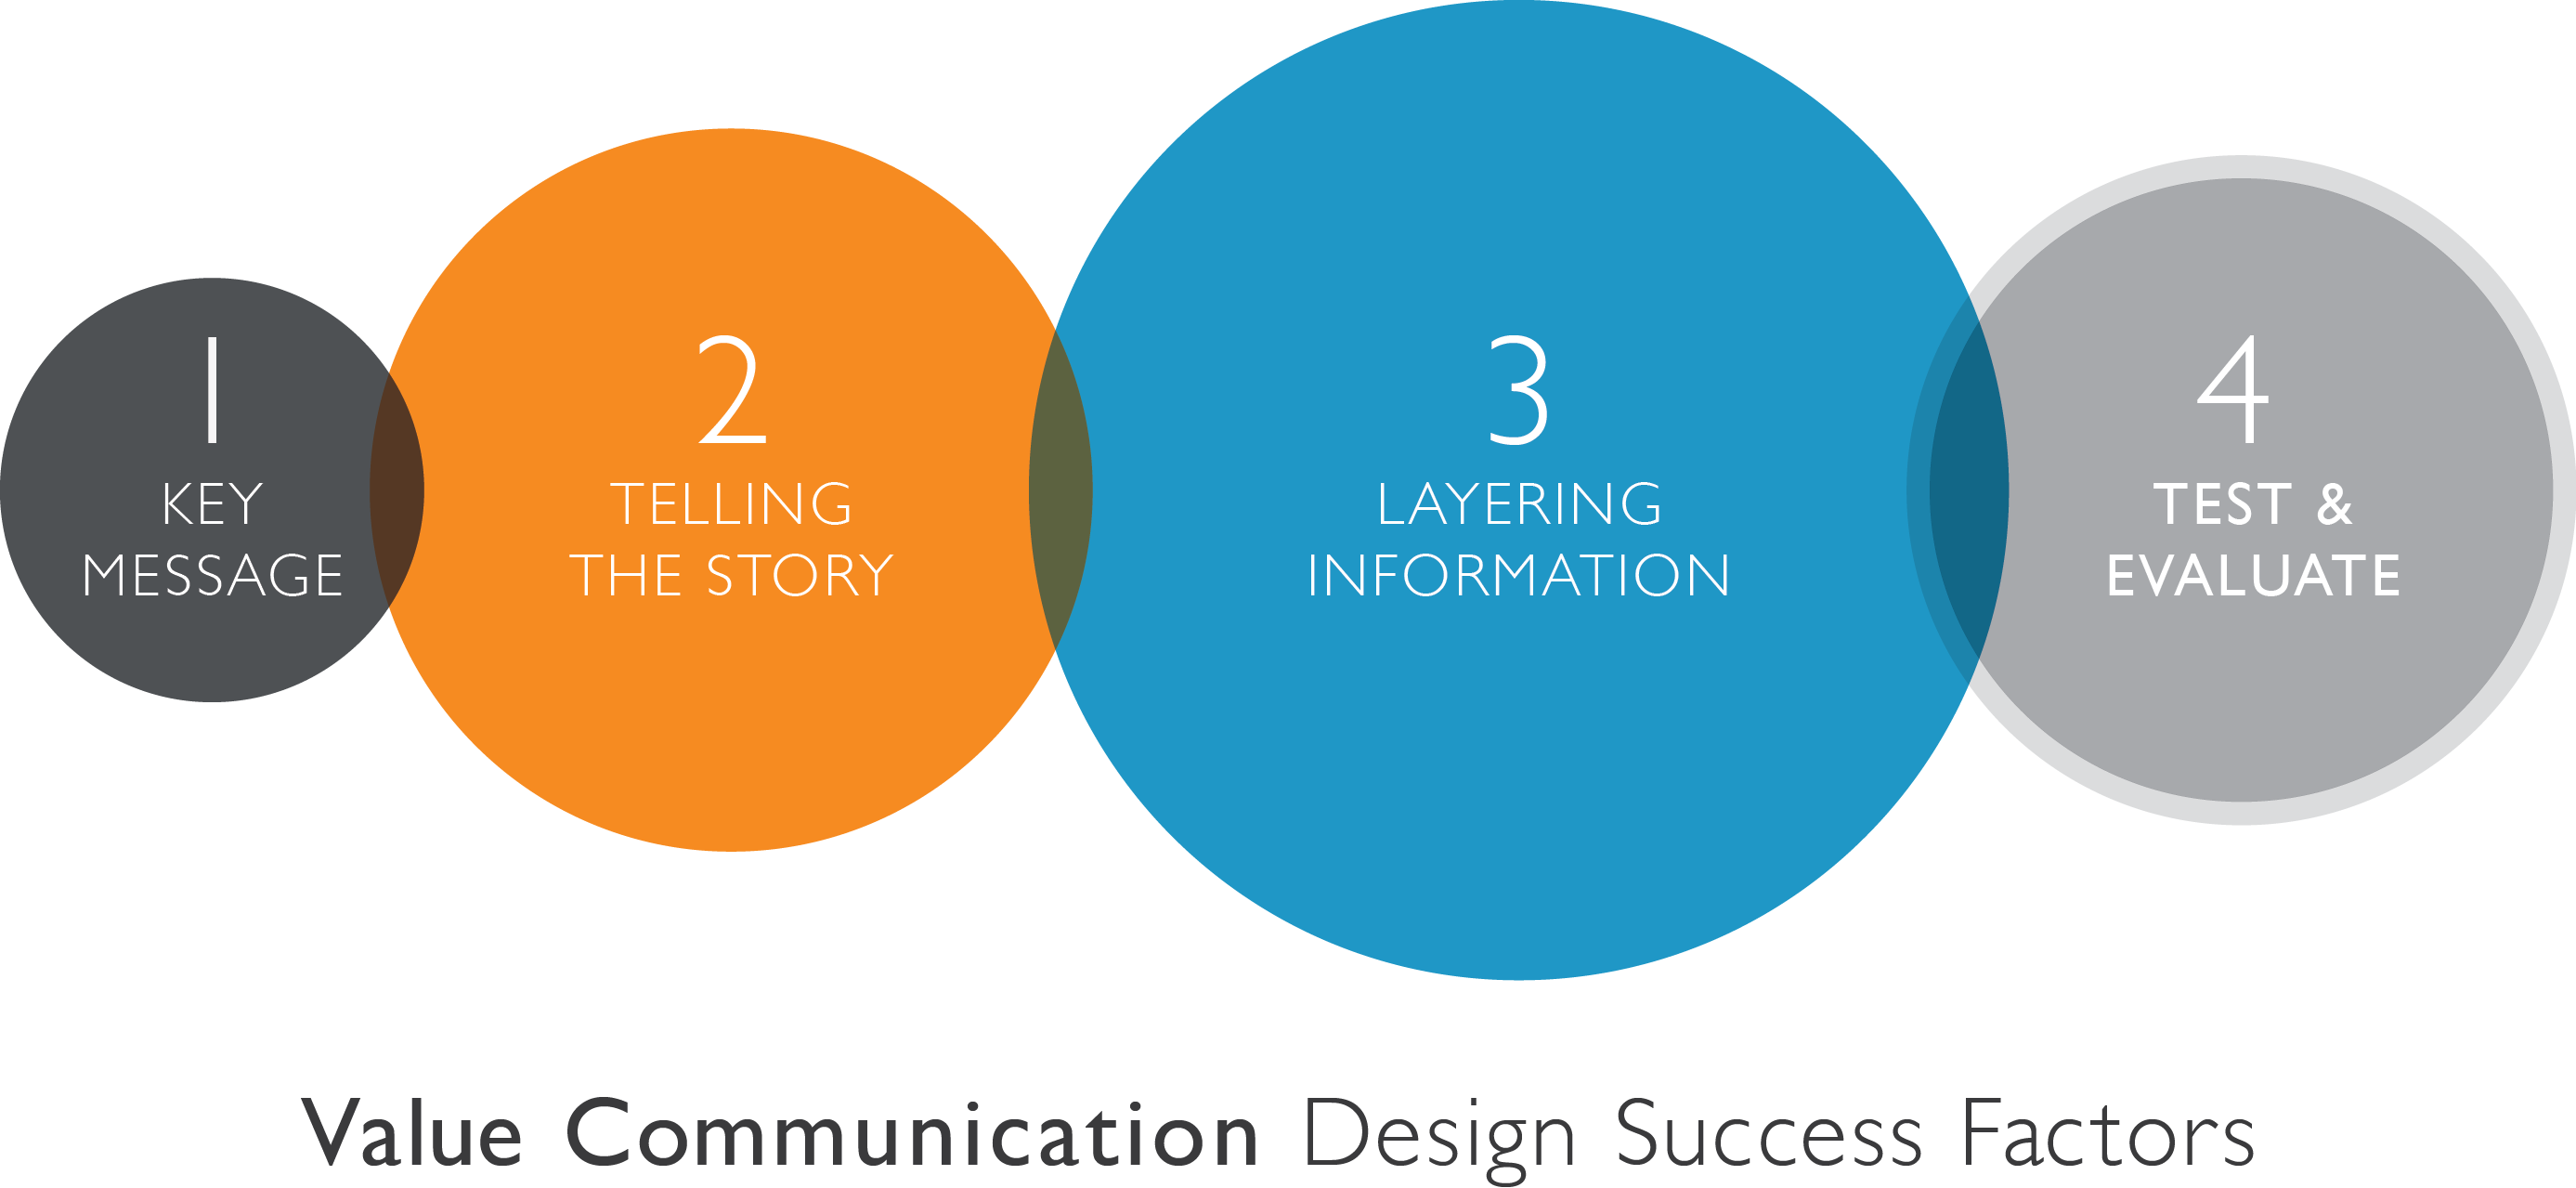 Success Factors In Value Communication Design - Layering Information (2774x1279)